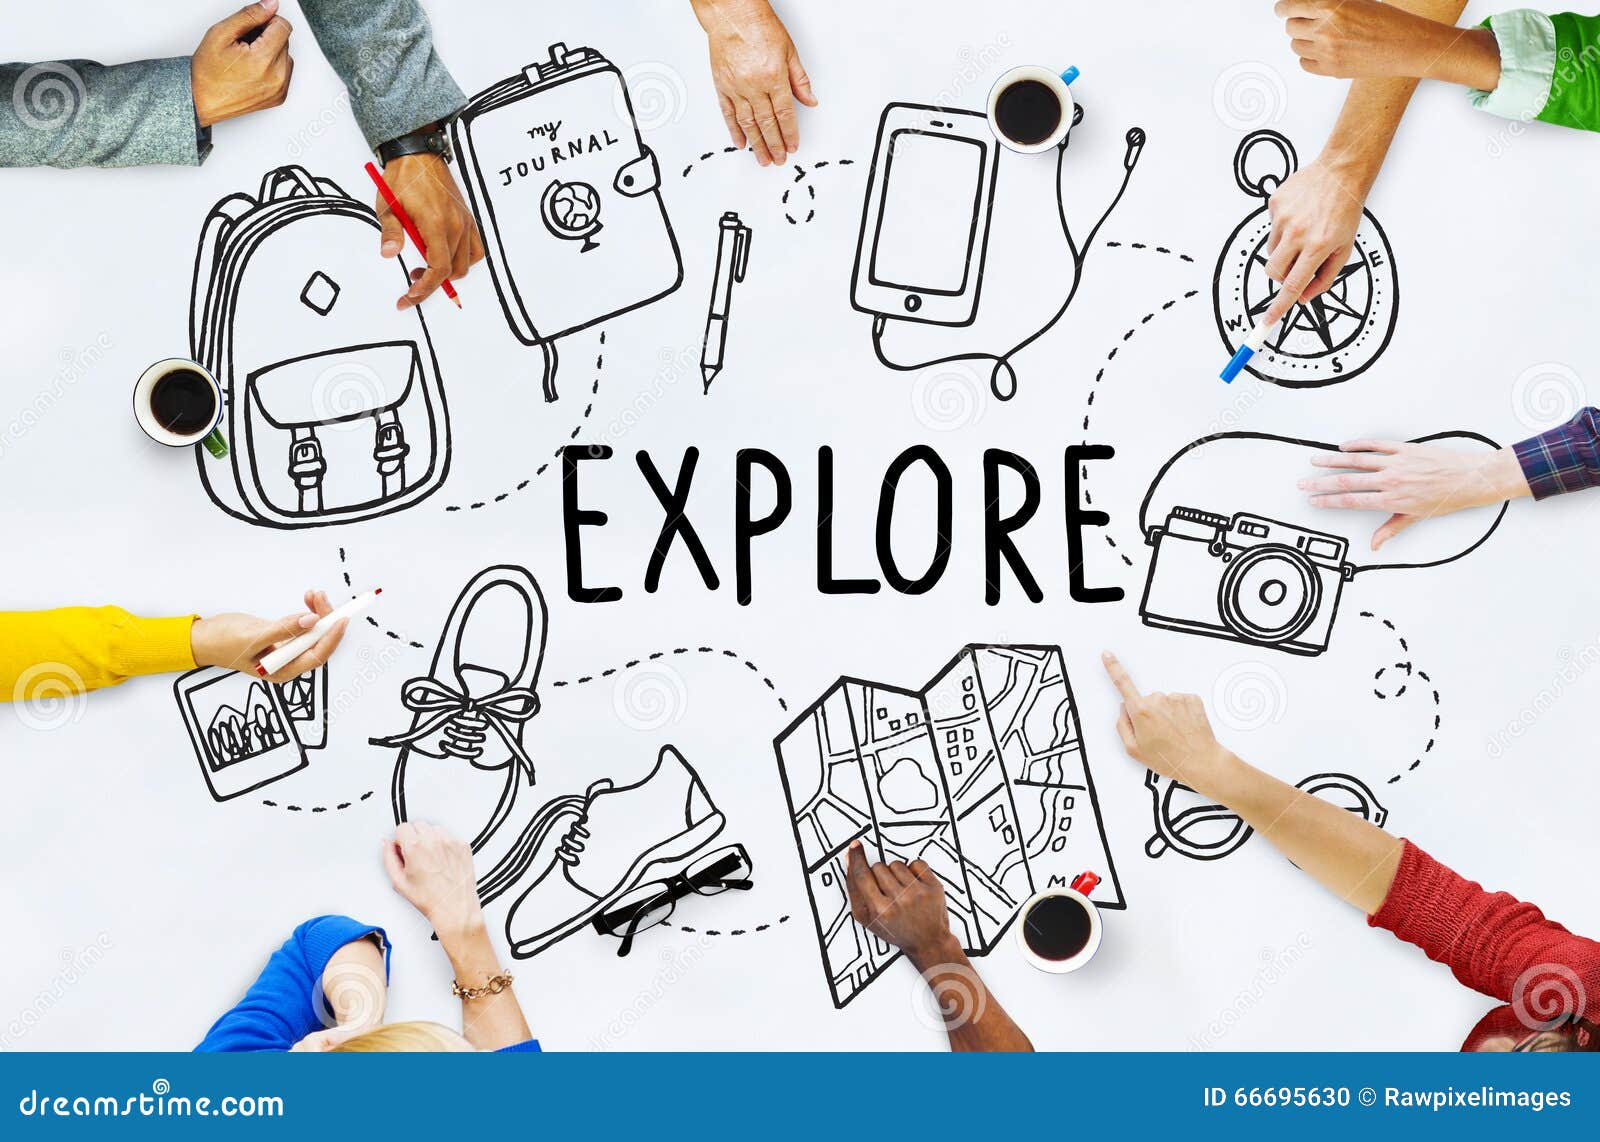 explore exploration travel journey backpacker concept